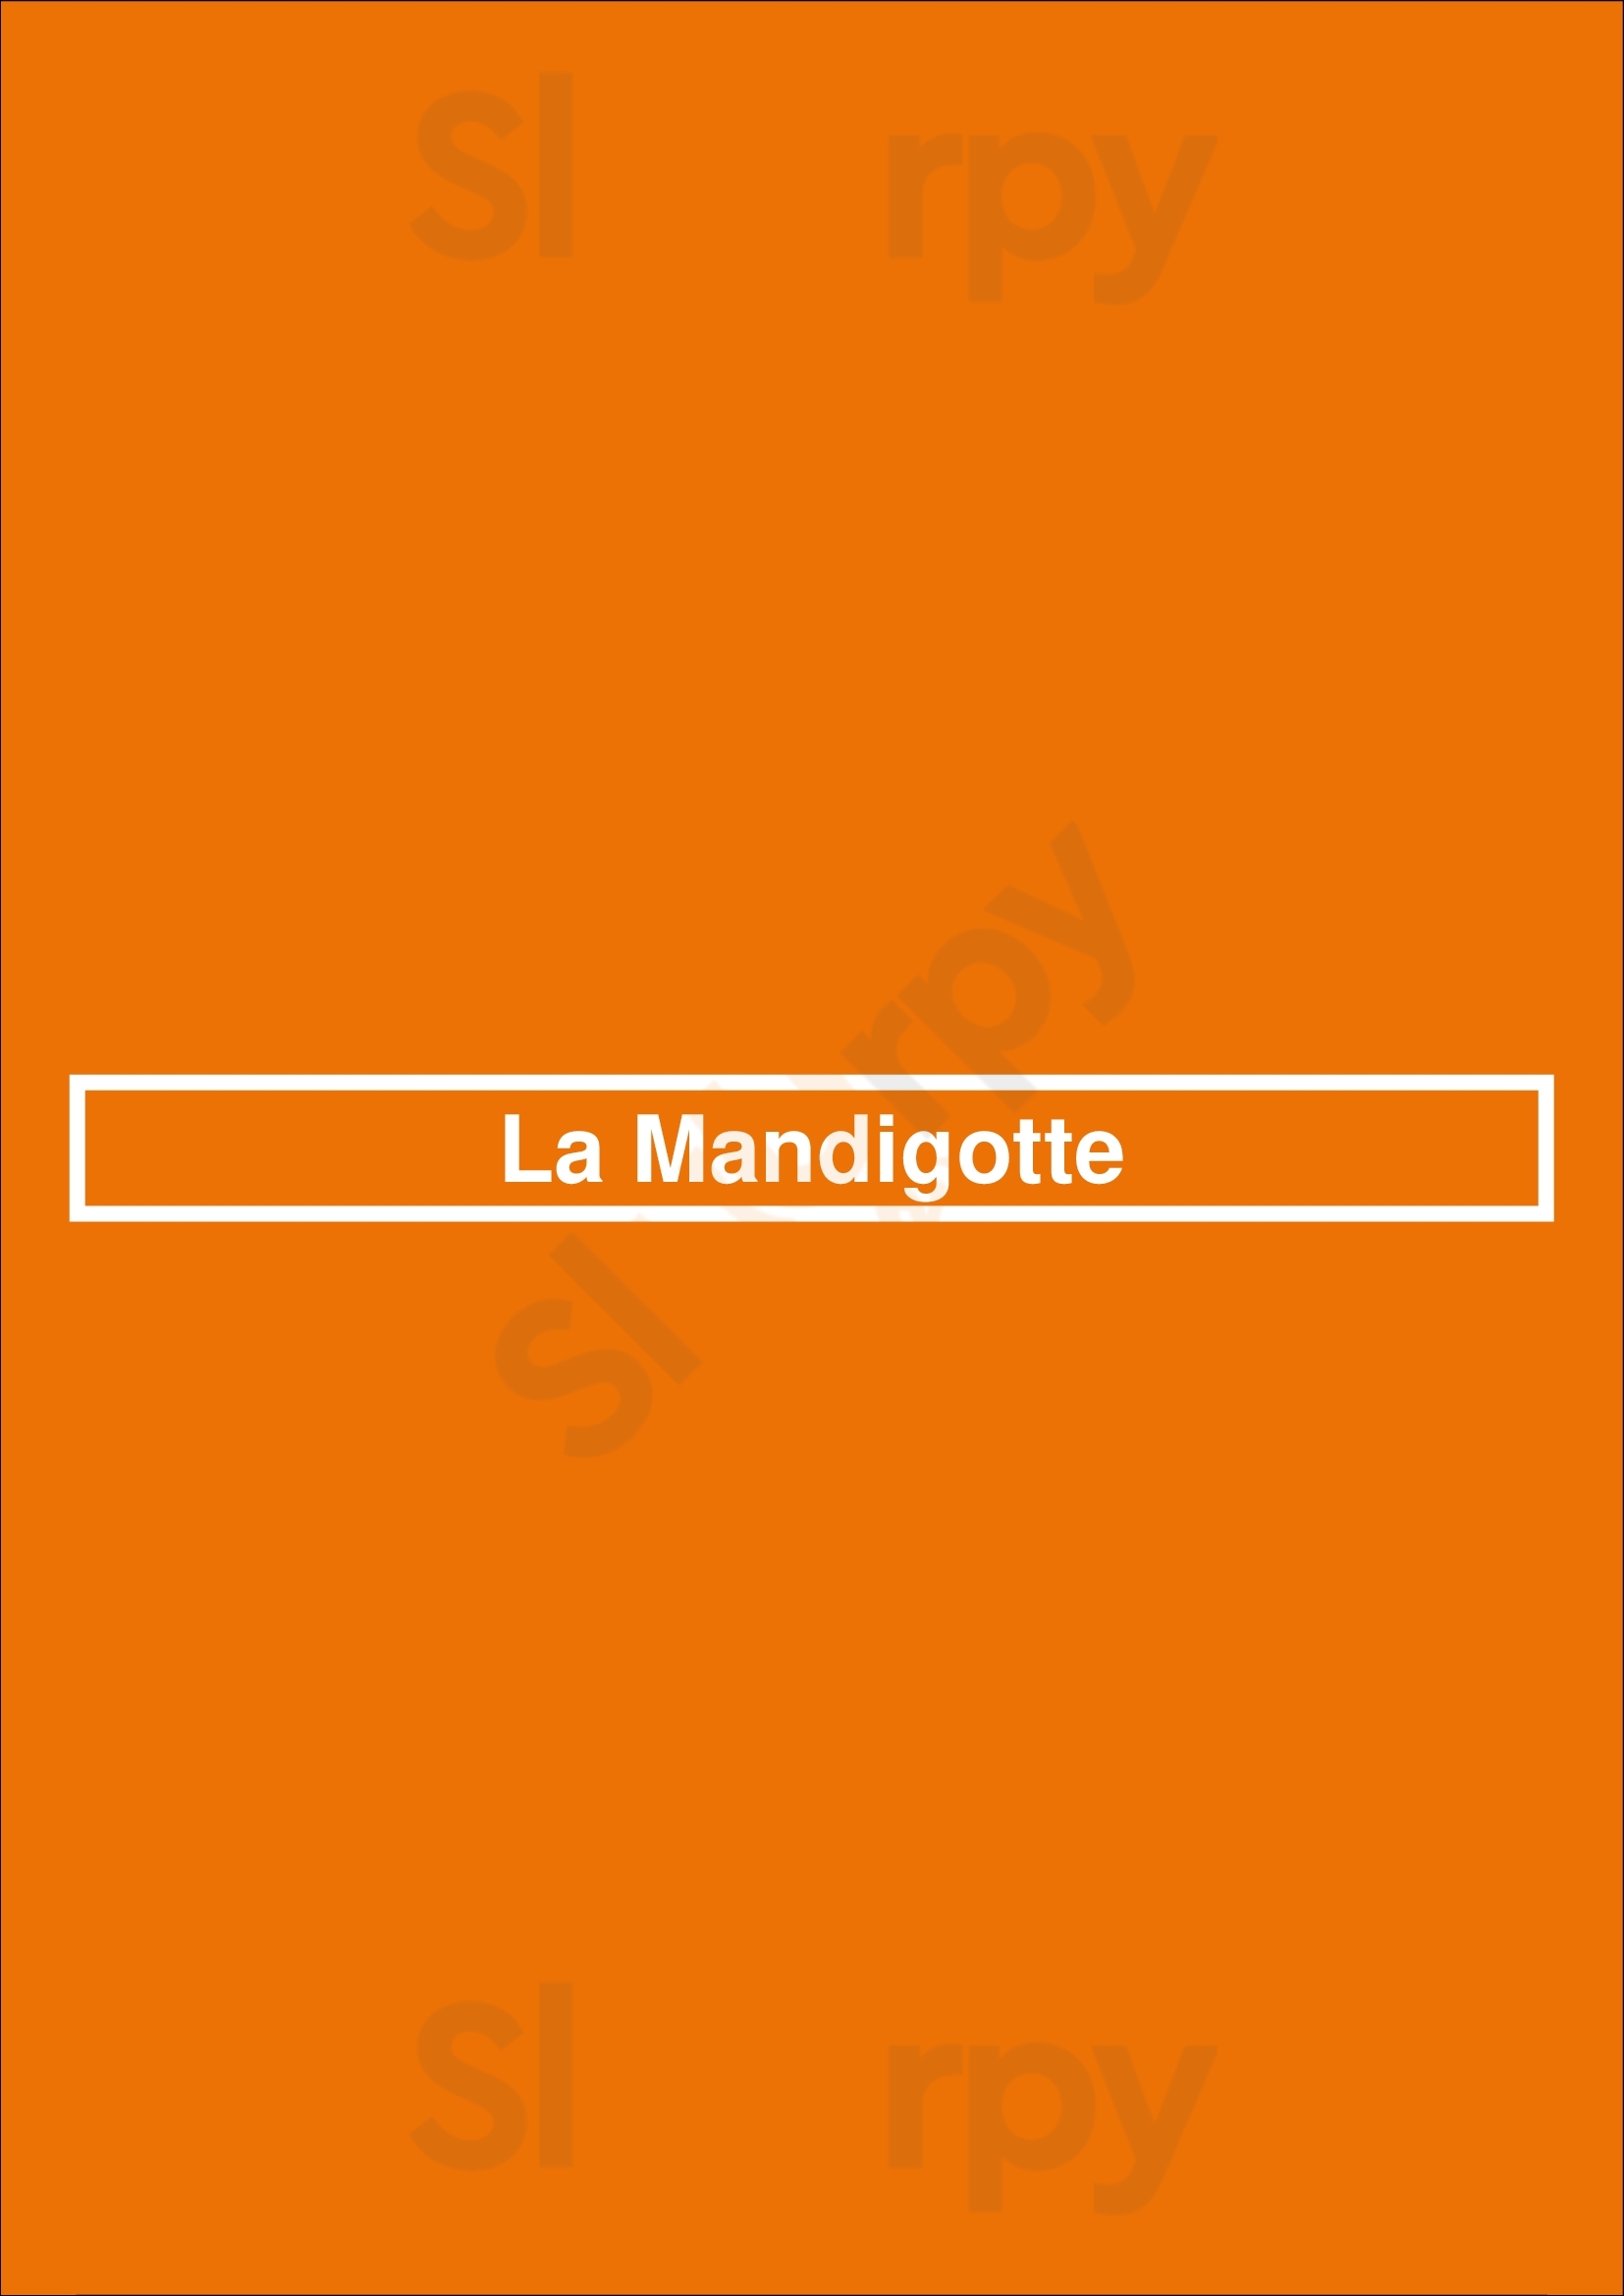 La Mandigotte Paris Menu - 1